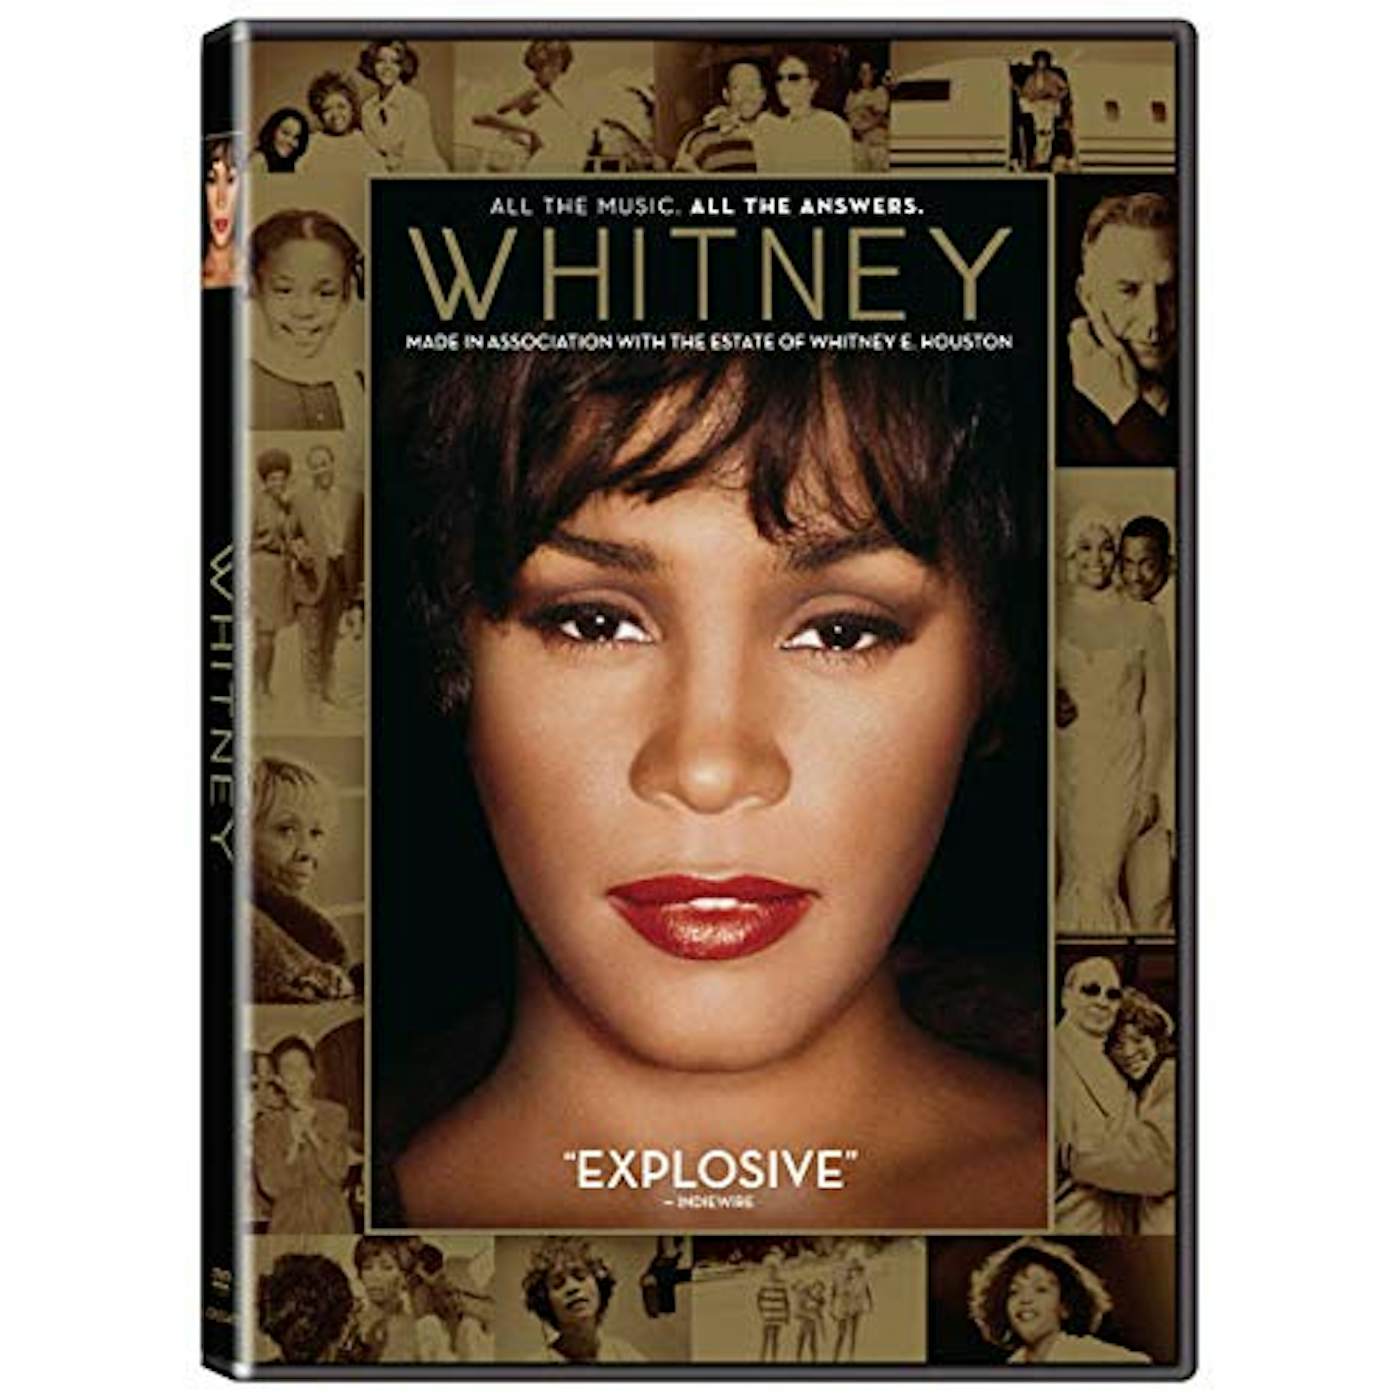 WHITNEY DVD